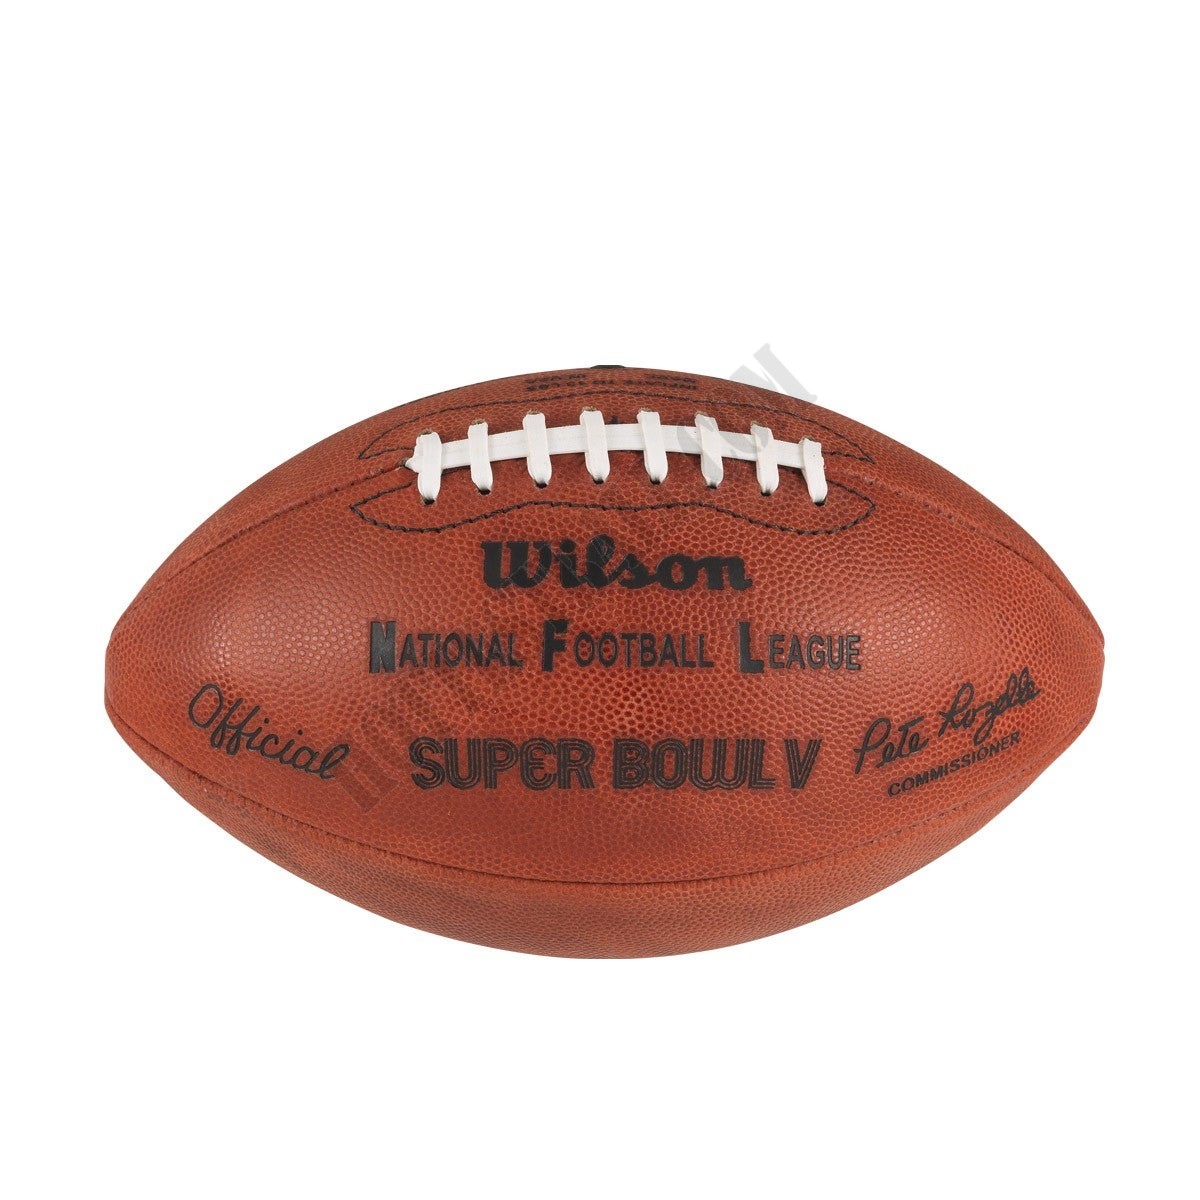 Super Bowl V Game Football - Baltimore Colts ● Wilson Promotions - Super Bowl V Game Football - Baltimore Colts ● Wilson Promotions